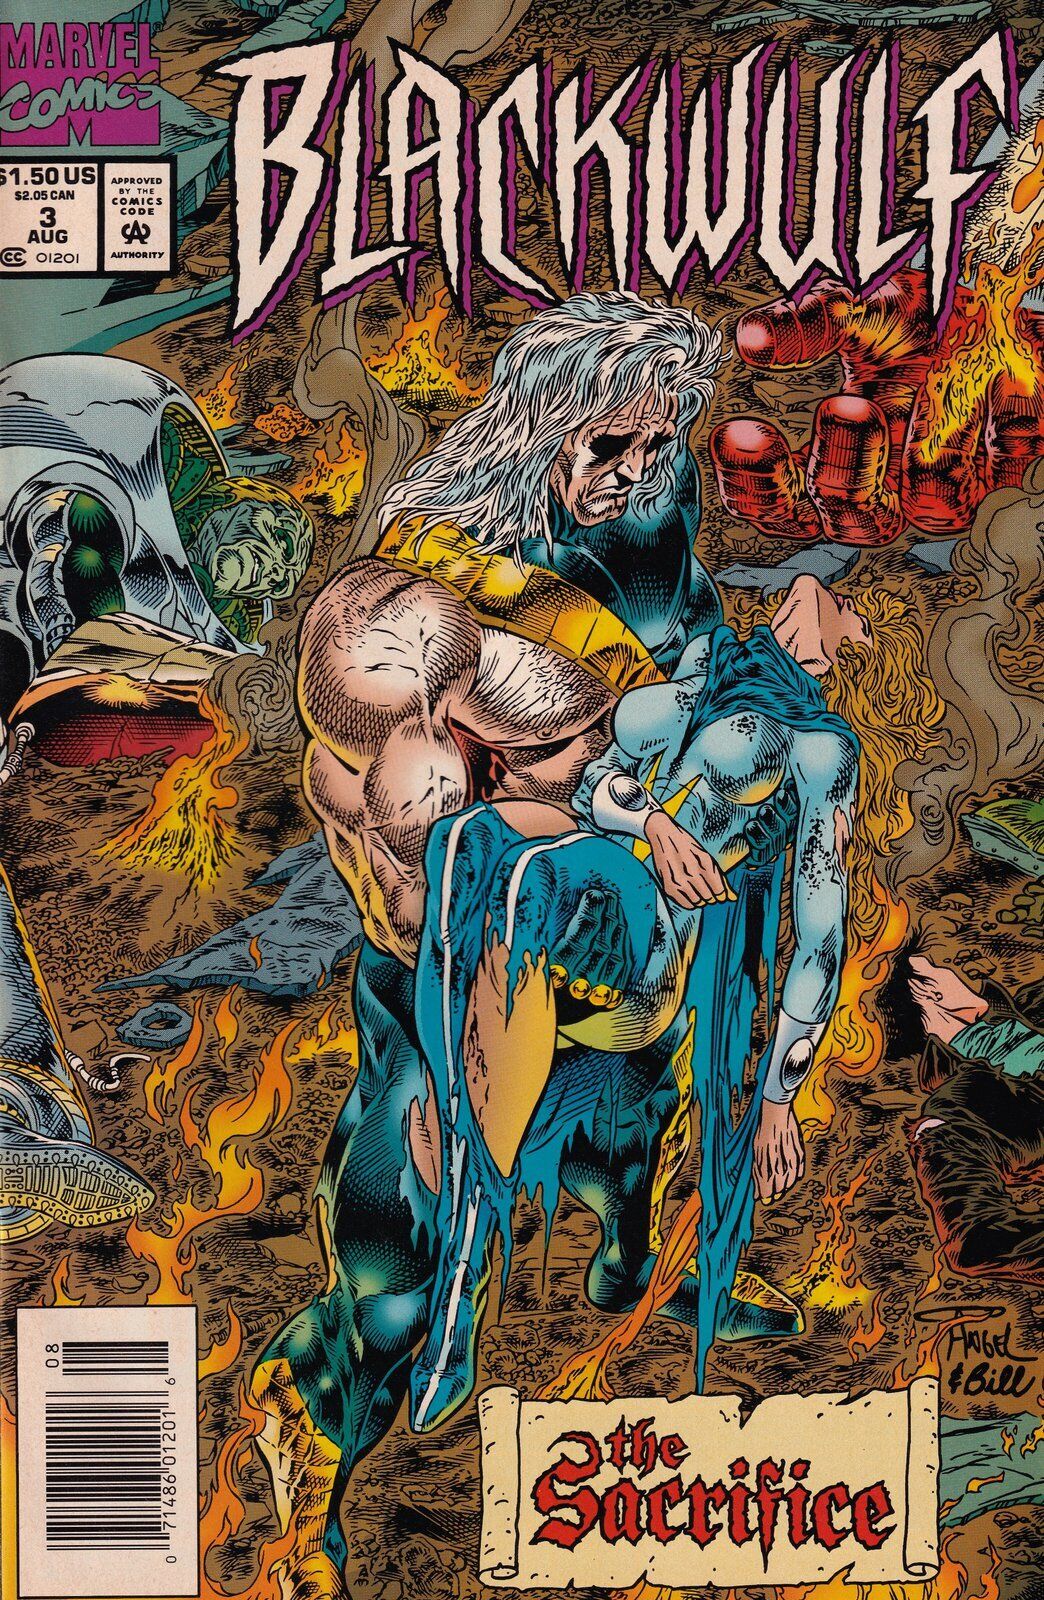 Blackwulf #3 Newsstand Cover (1994-1995) Marvel Comics